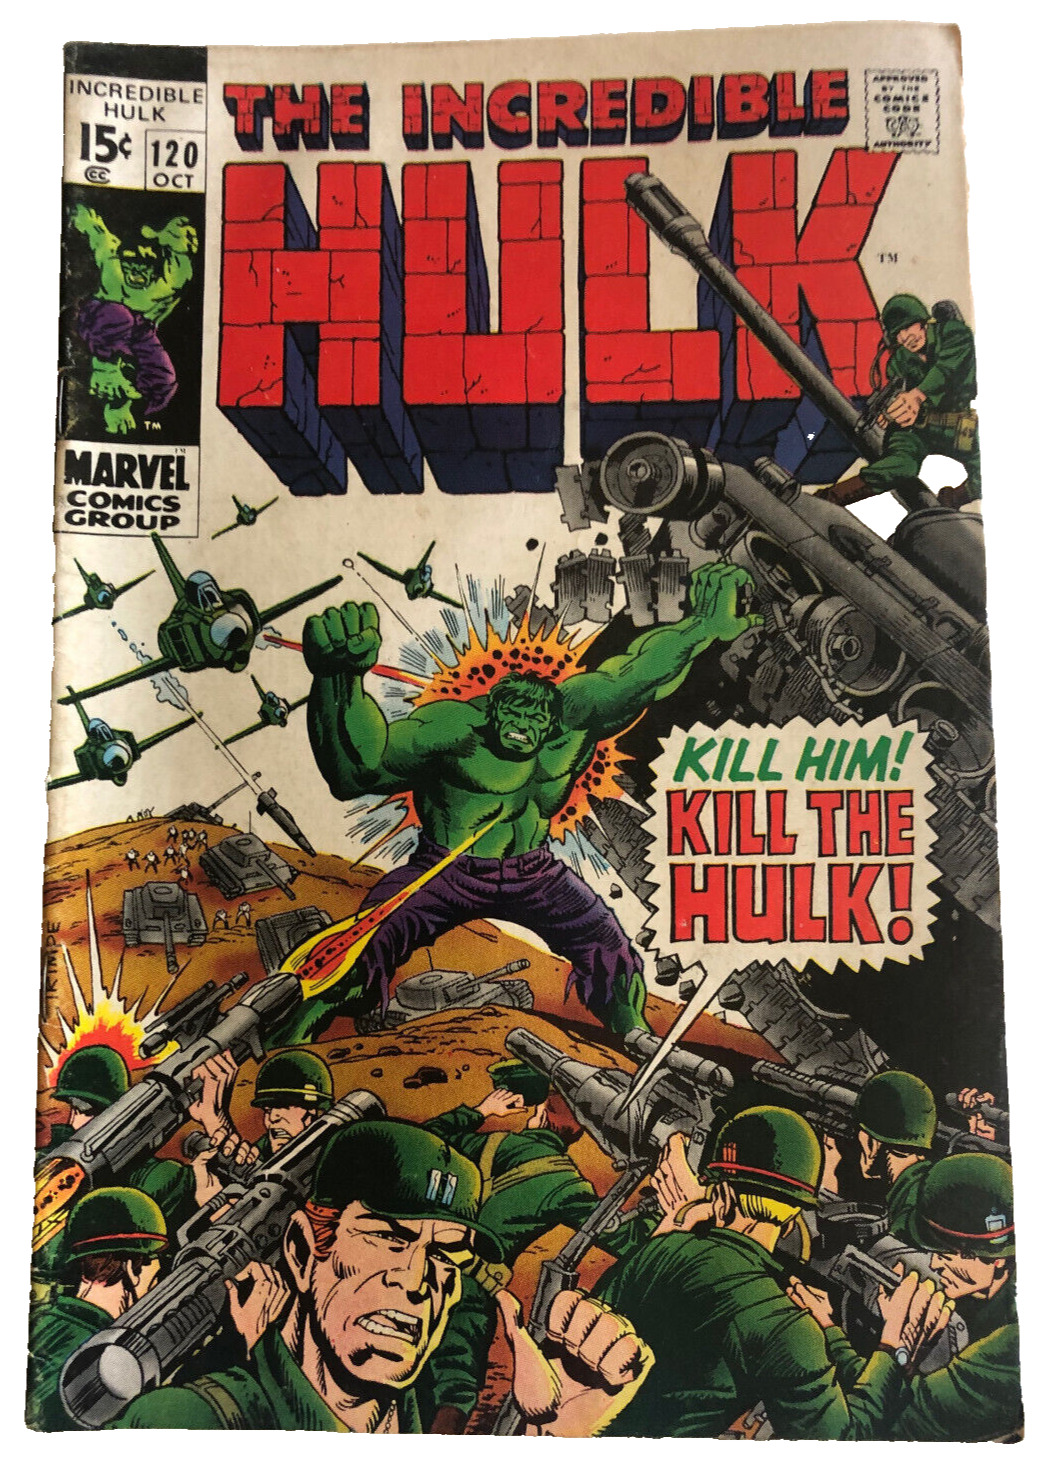 Marvel Comic The Incredible Hulk #120 October 1969 Vintage Original